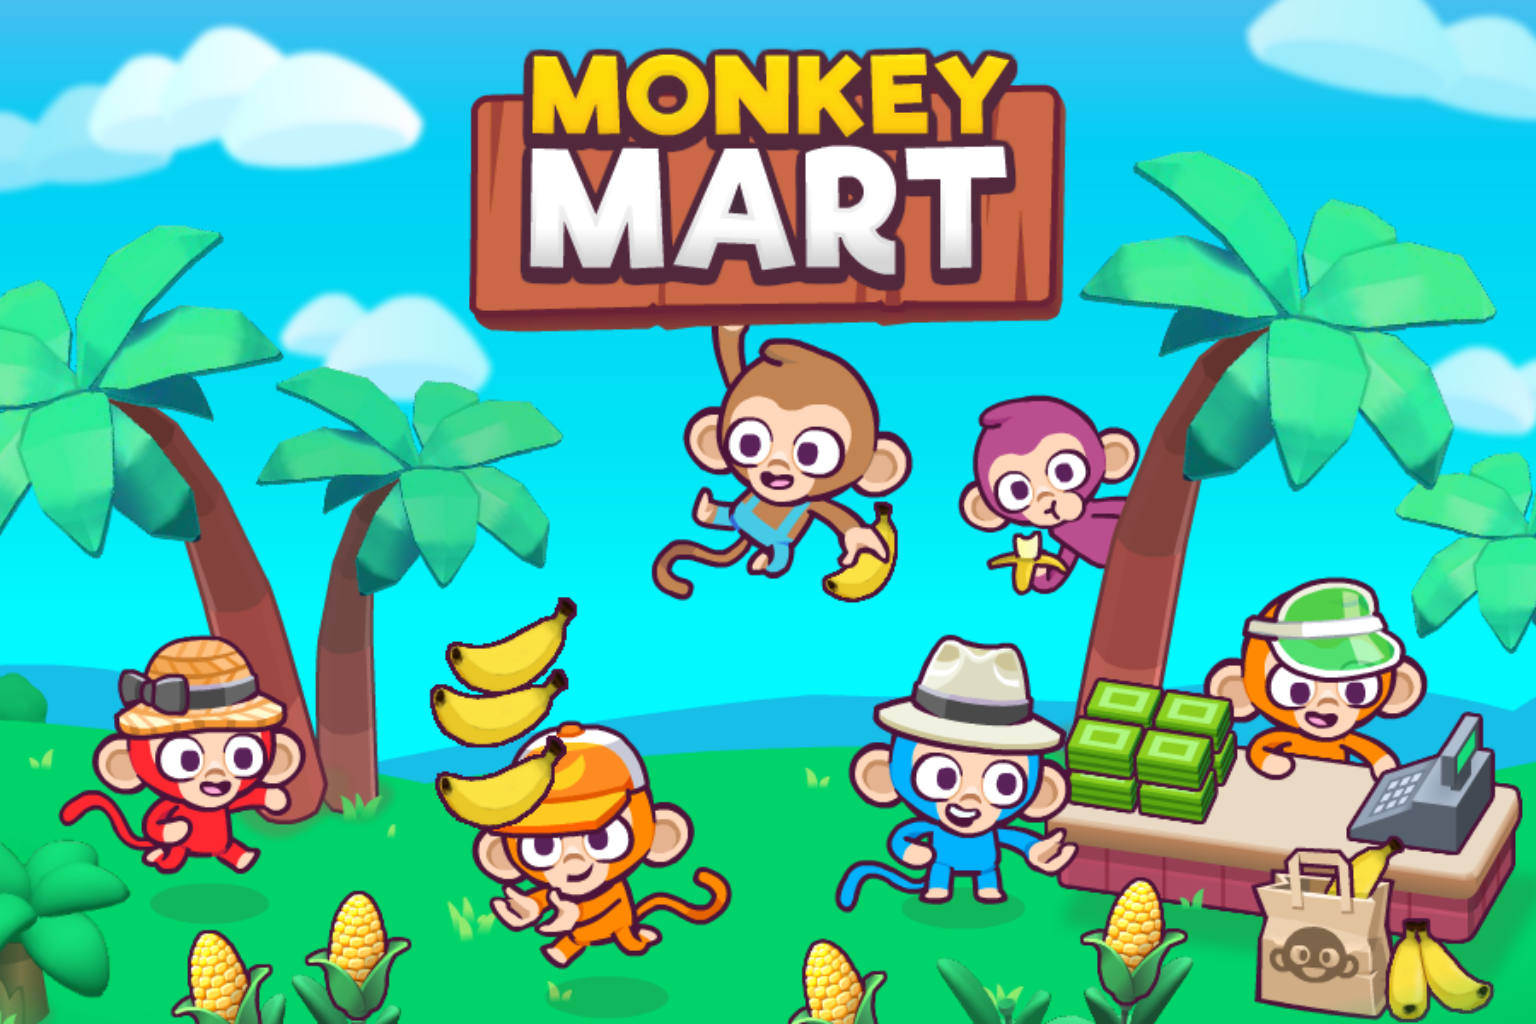 Monkey Mart: Your Ultimate Shopping Destination